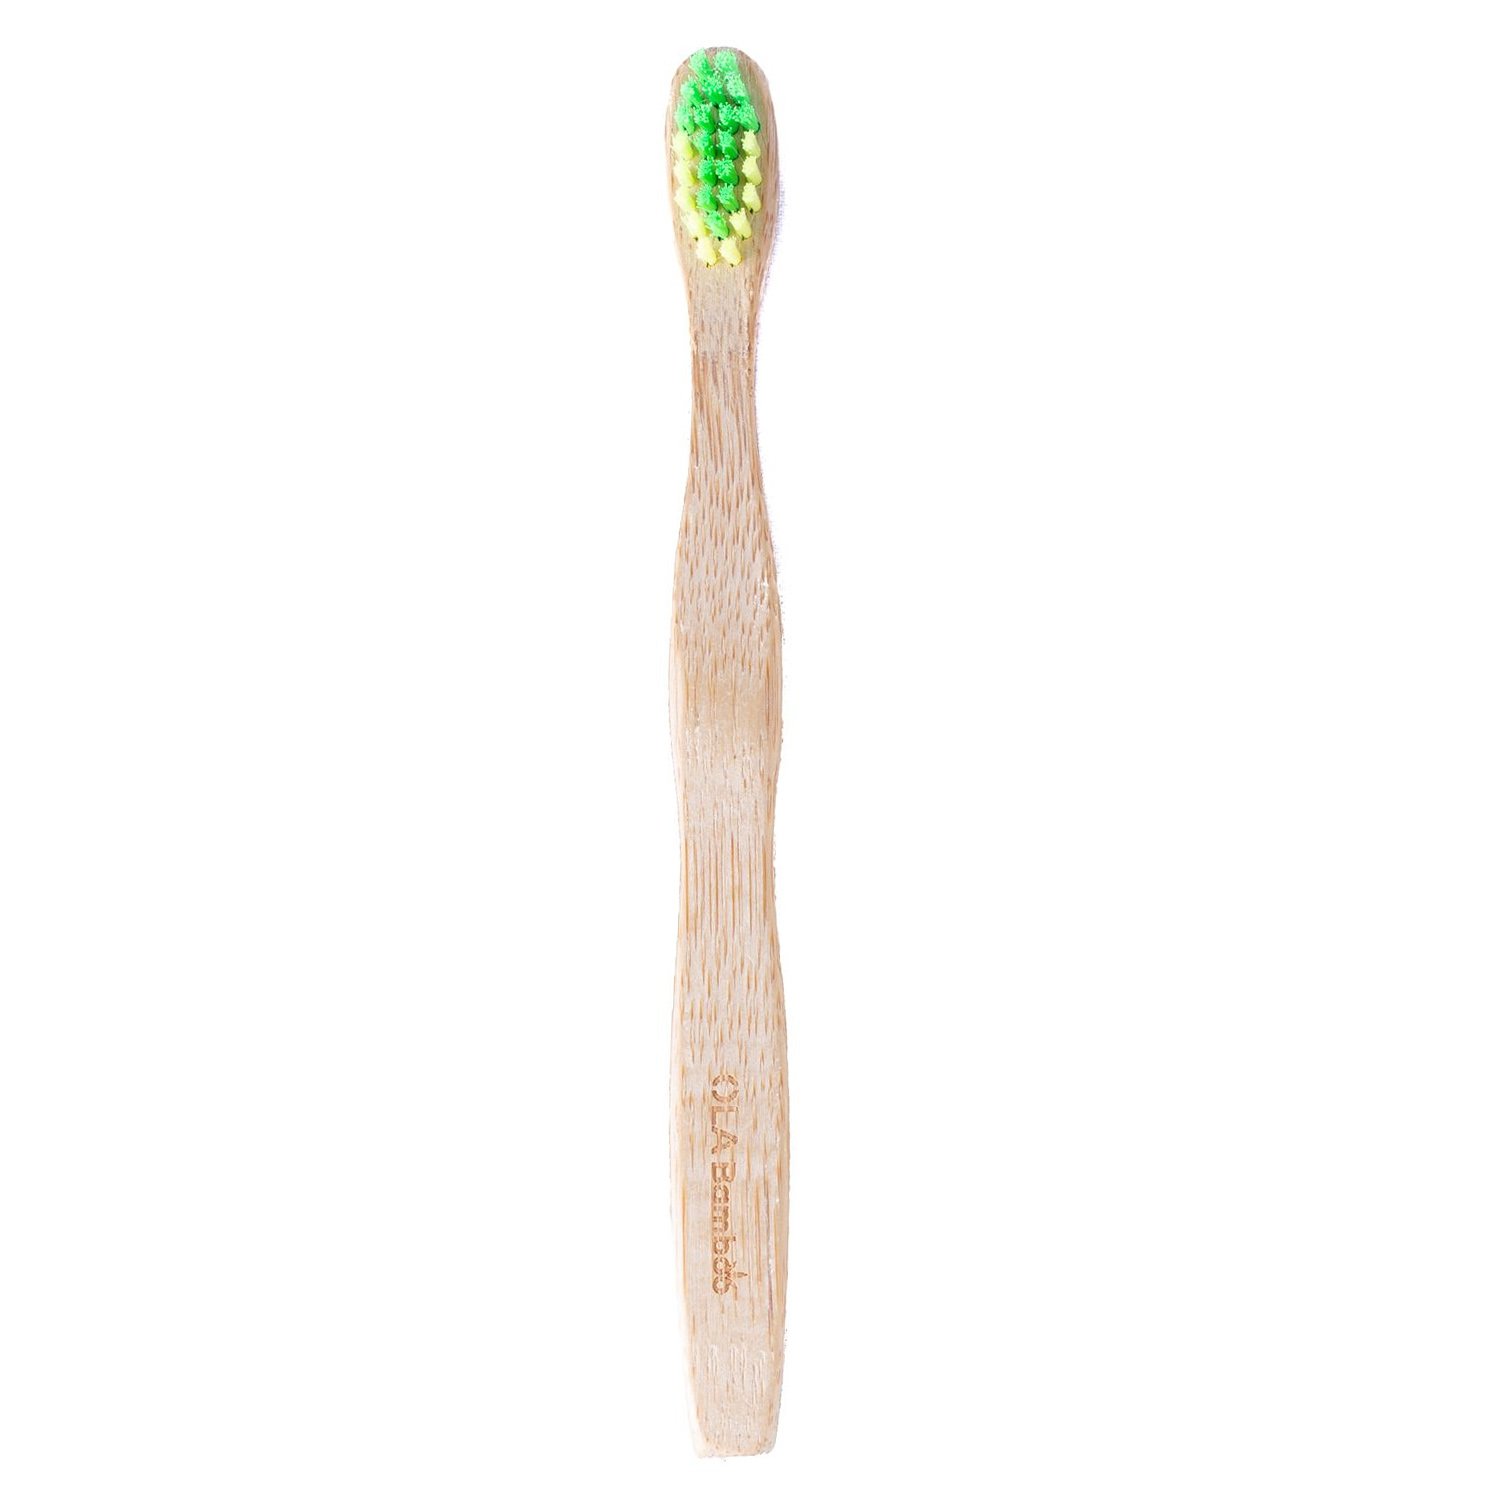 OLABamboo Kids Toothbrush Green, Yellow Παιδική Οδοντόβουρτσα Από 100% Μπαμπού Μαλακή Πράσινο, Κίτρινο 1 Τεμάχιο